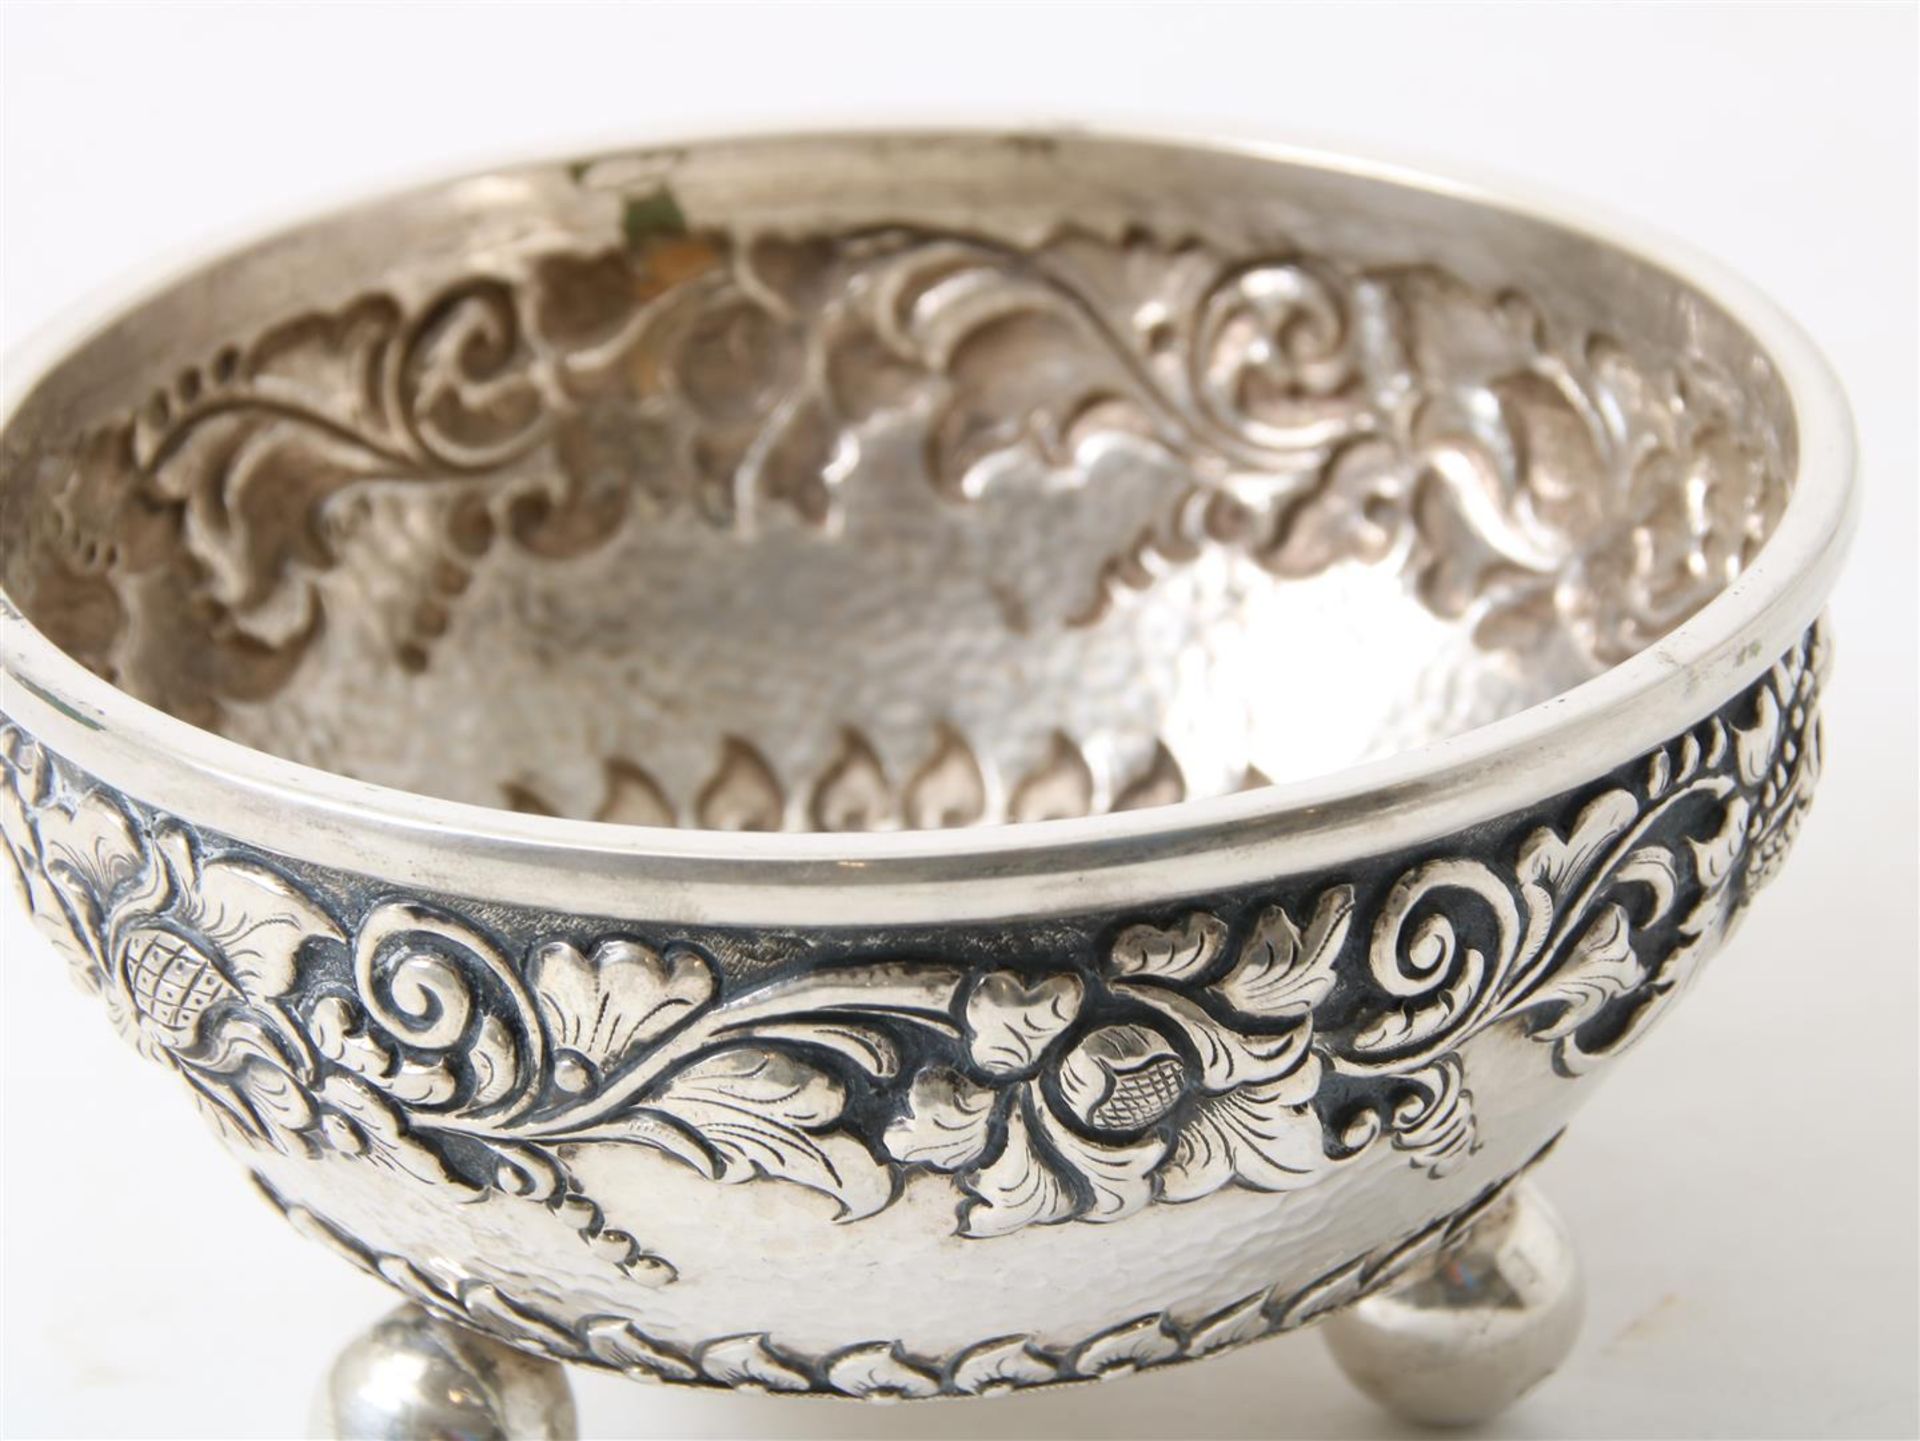 Djokja silver rose cutter, marked 800, BWG - Image 2 of 4